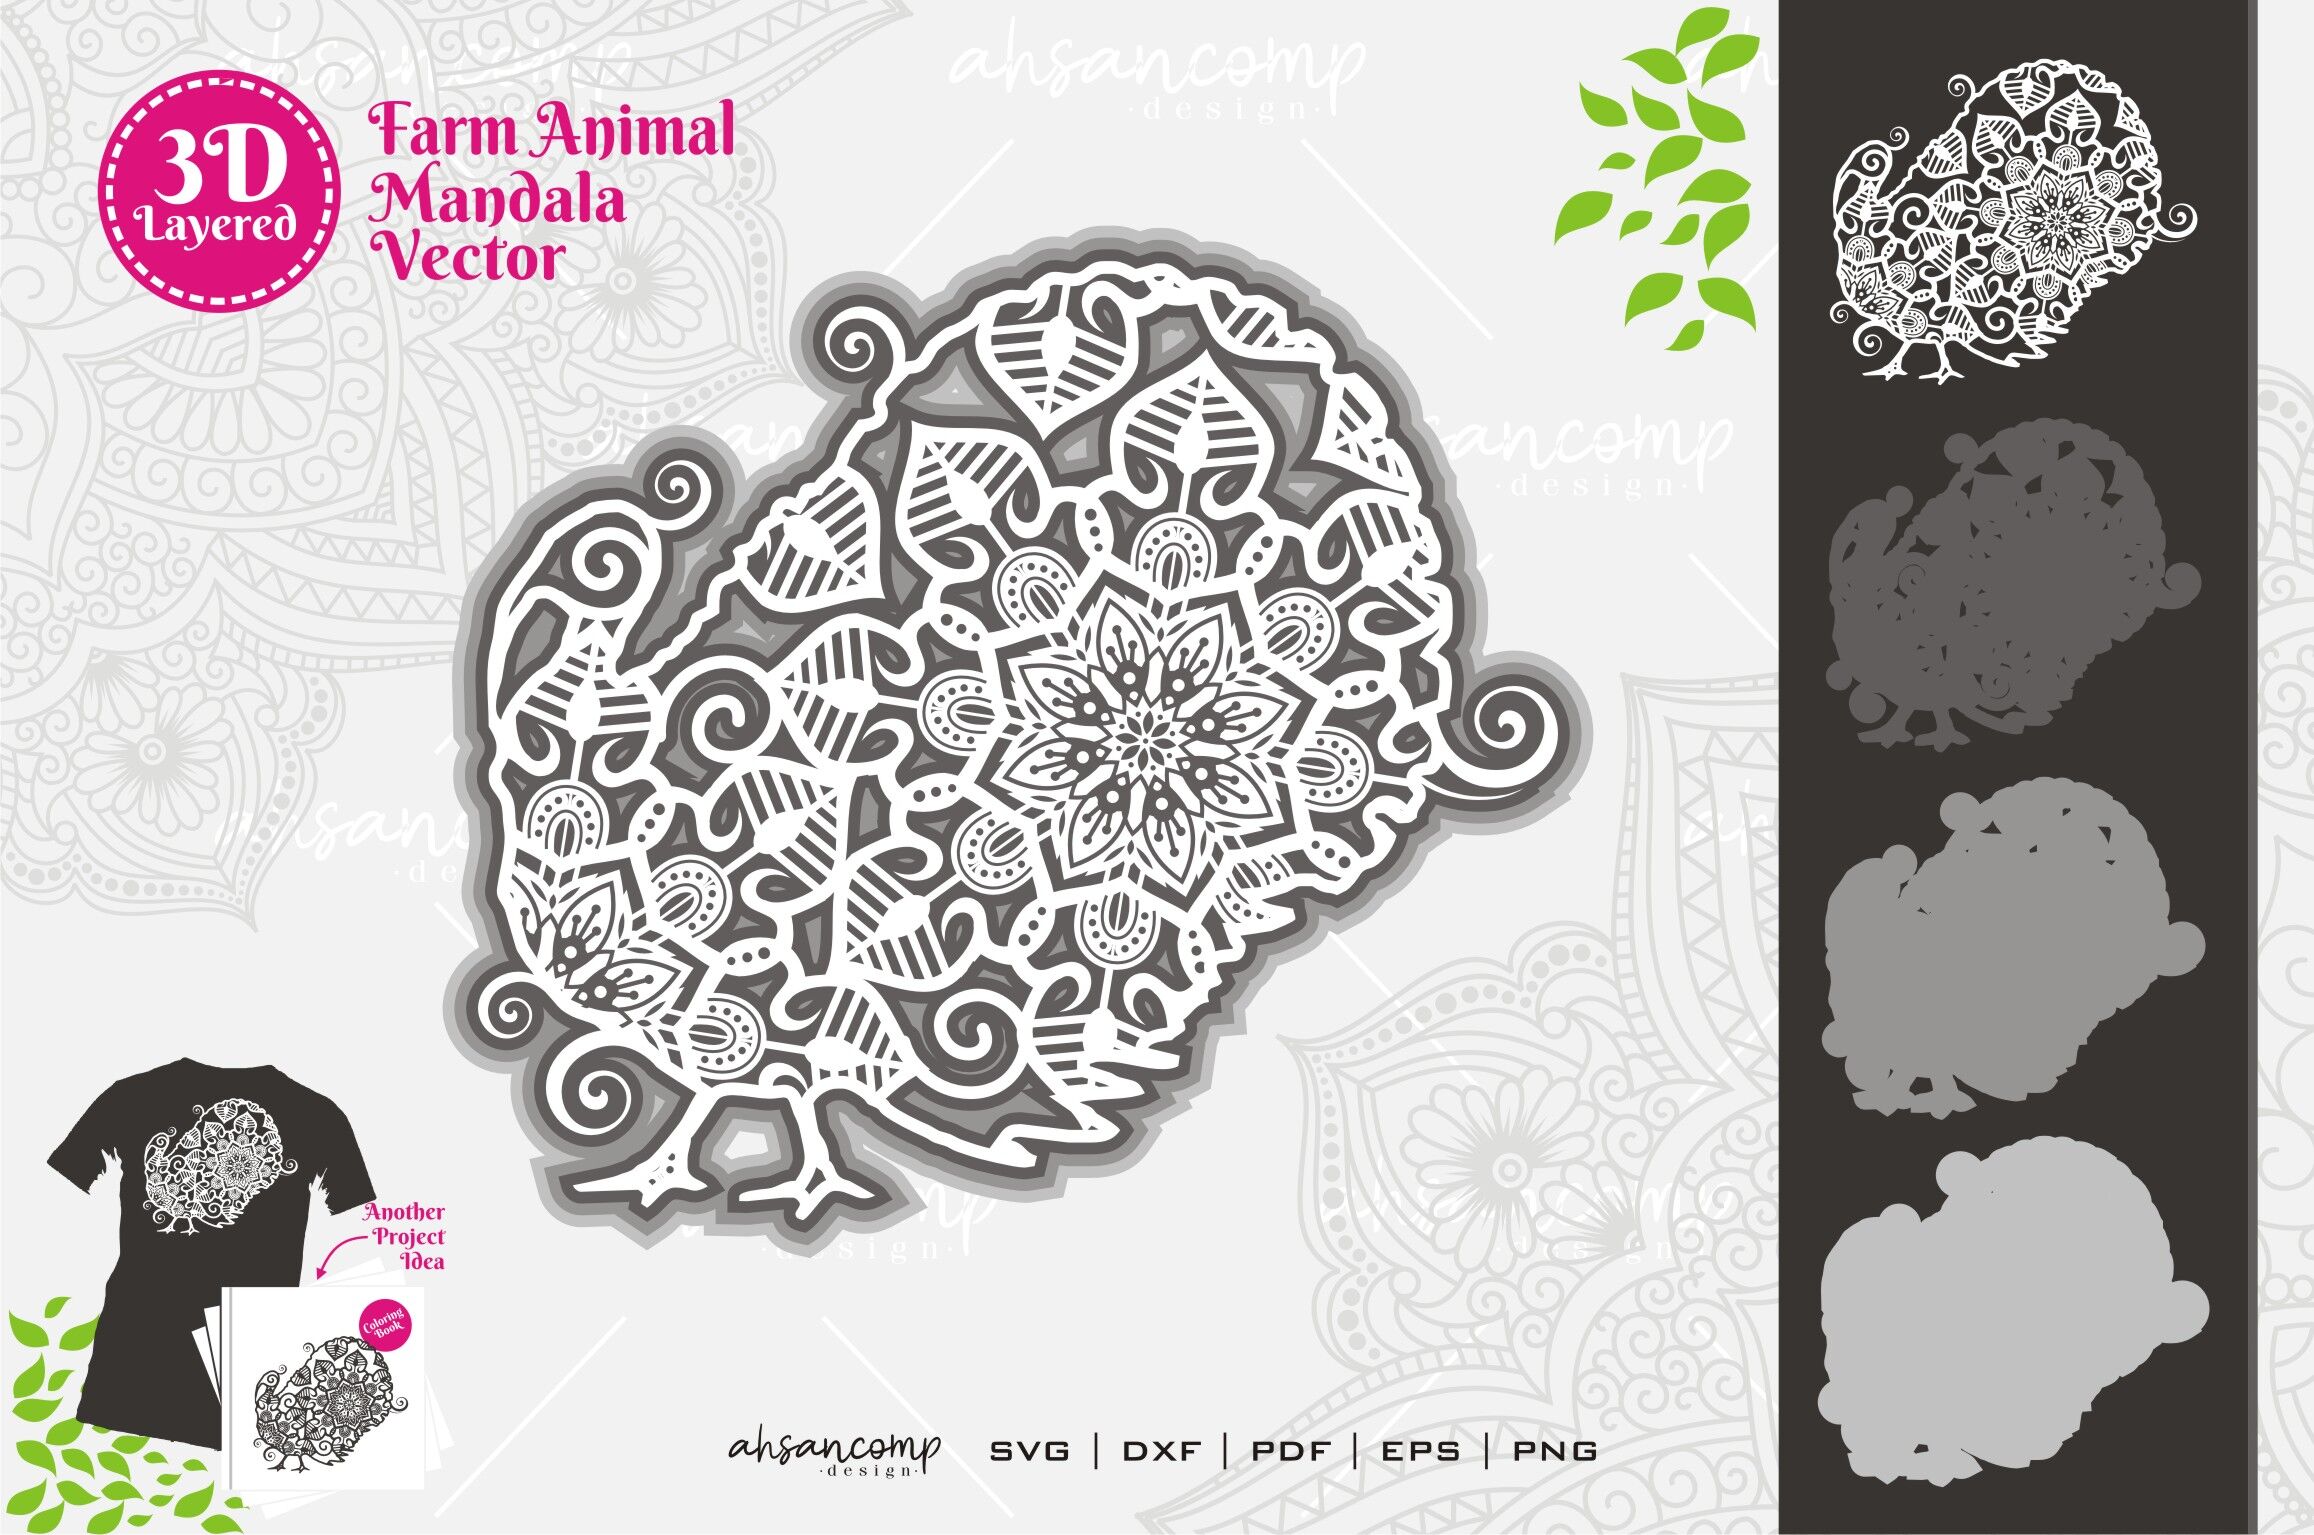 Farm Animal Mandala Svg 3d Layered 10 By Ahsancomp Studio Thehungryjpeg Com